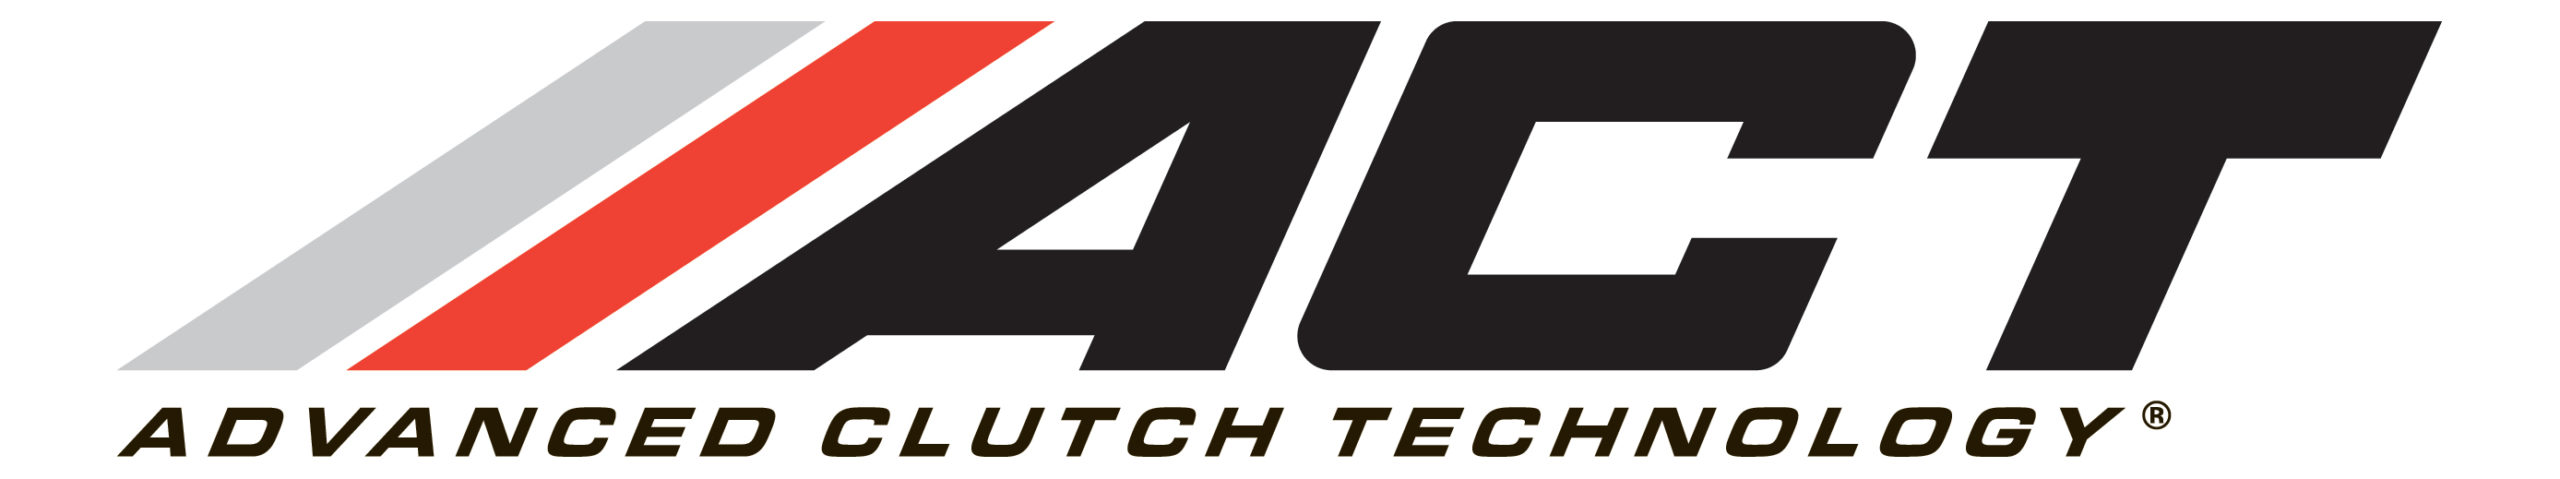 Advanced Clutch Technology logo